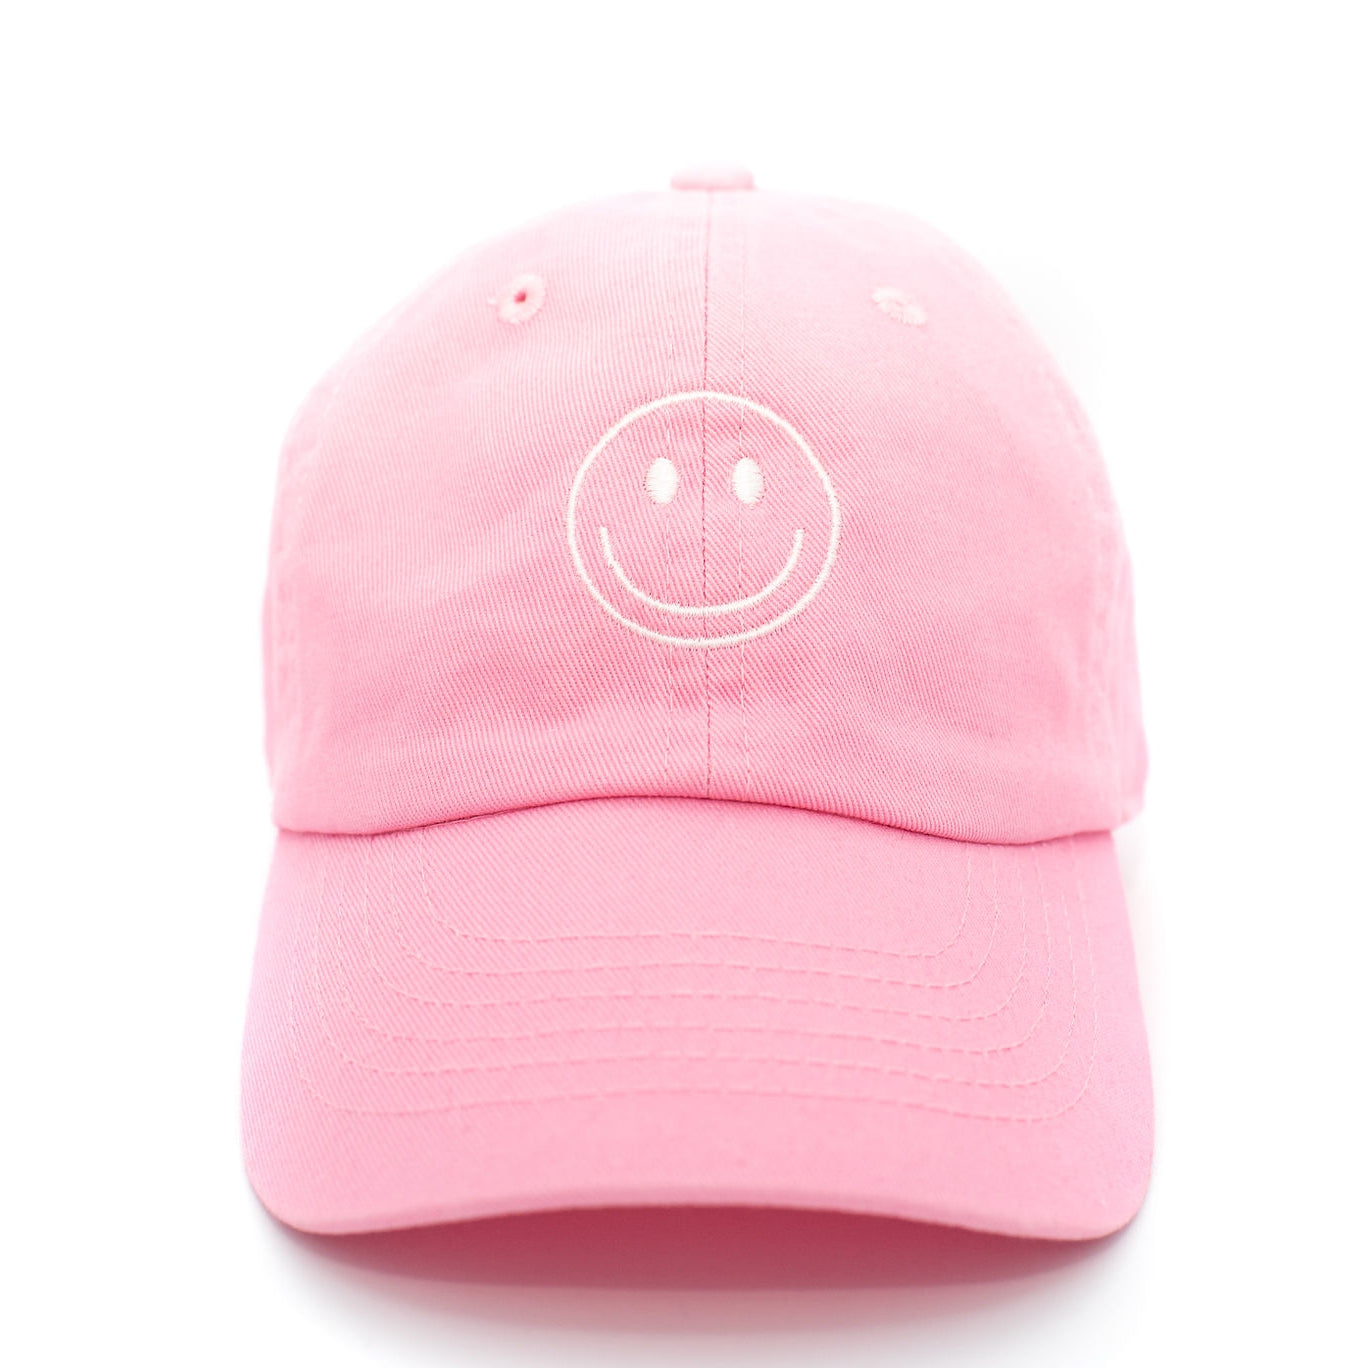 light pink smiley face hat